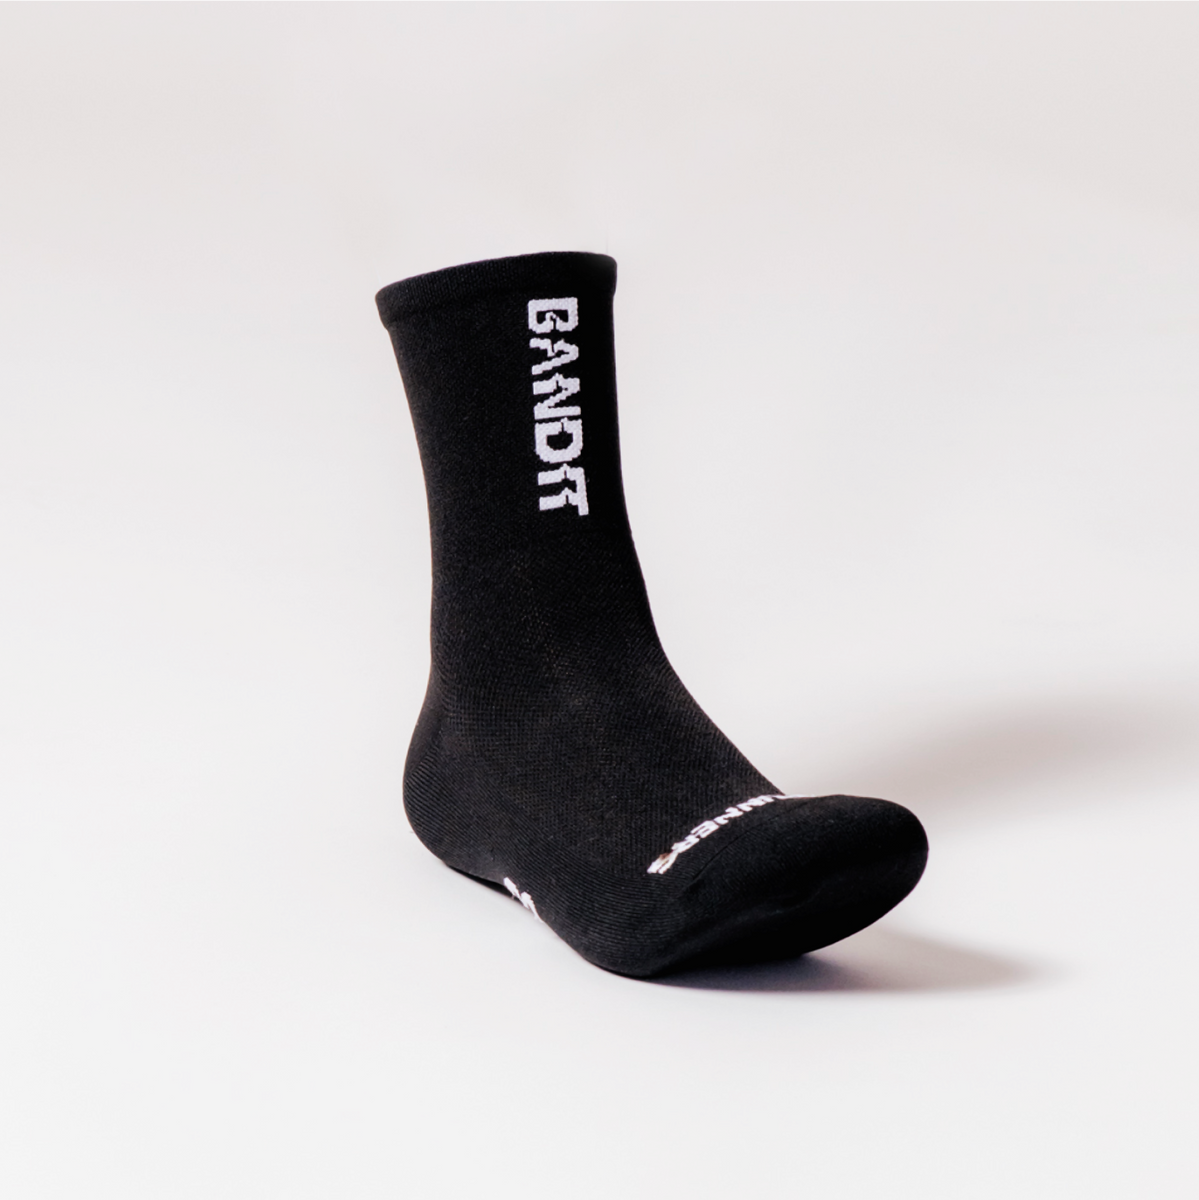 Lite Run Quarter Socks - Bandit White Pack - 2 with Black Warped 